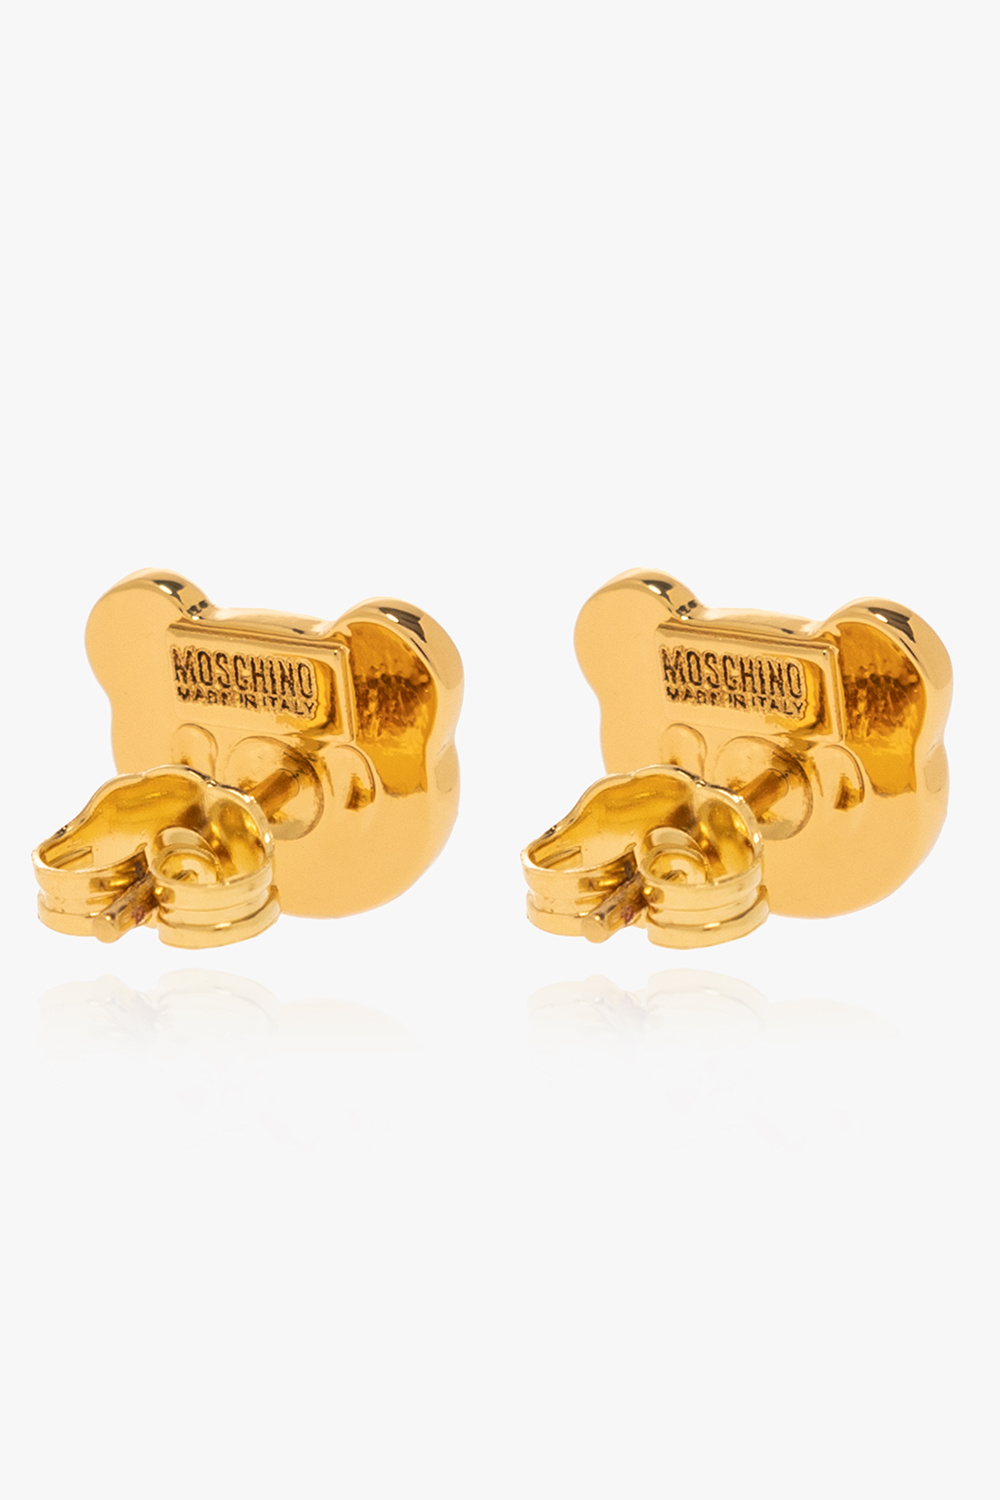 Moschino Brass earrings